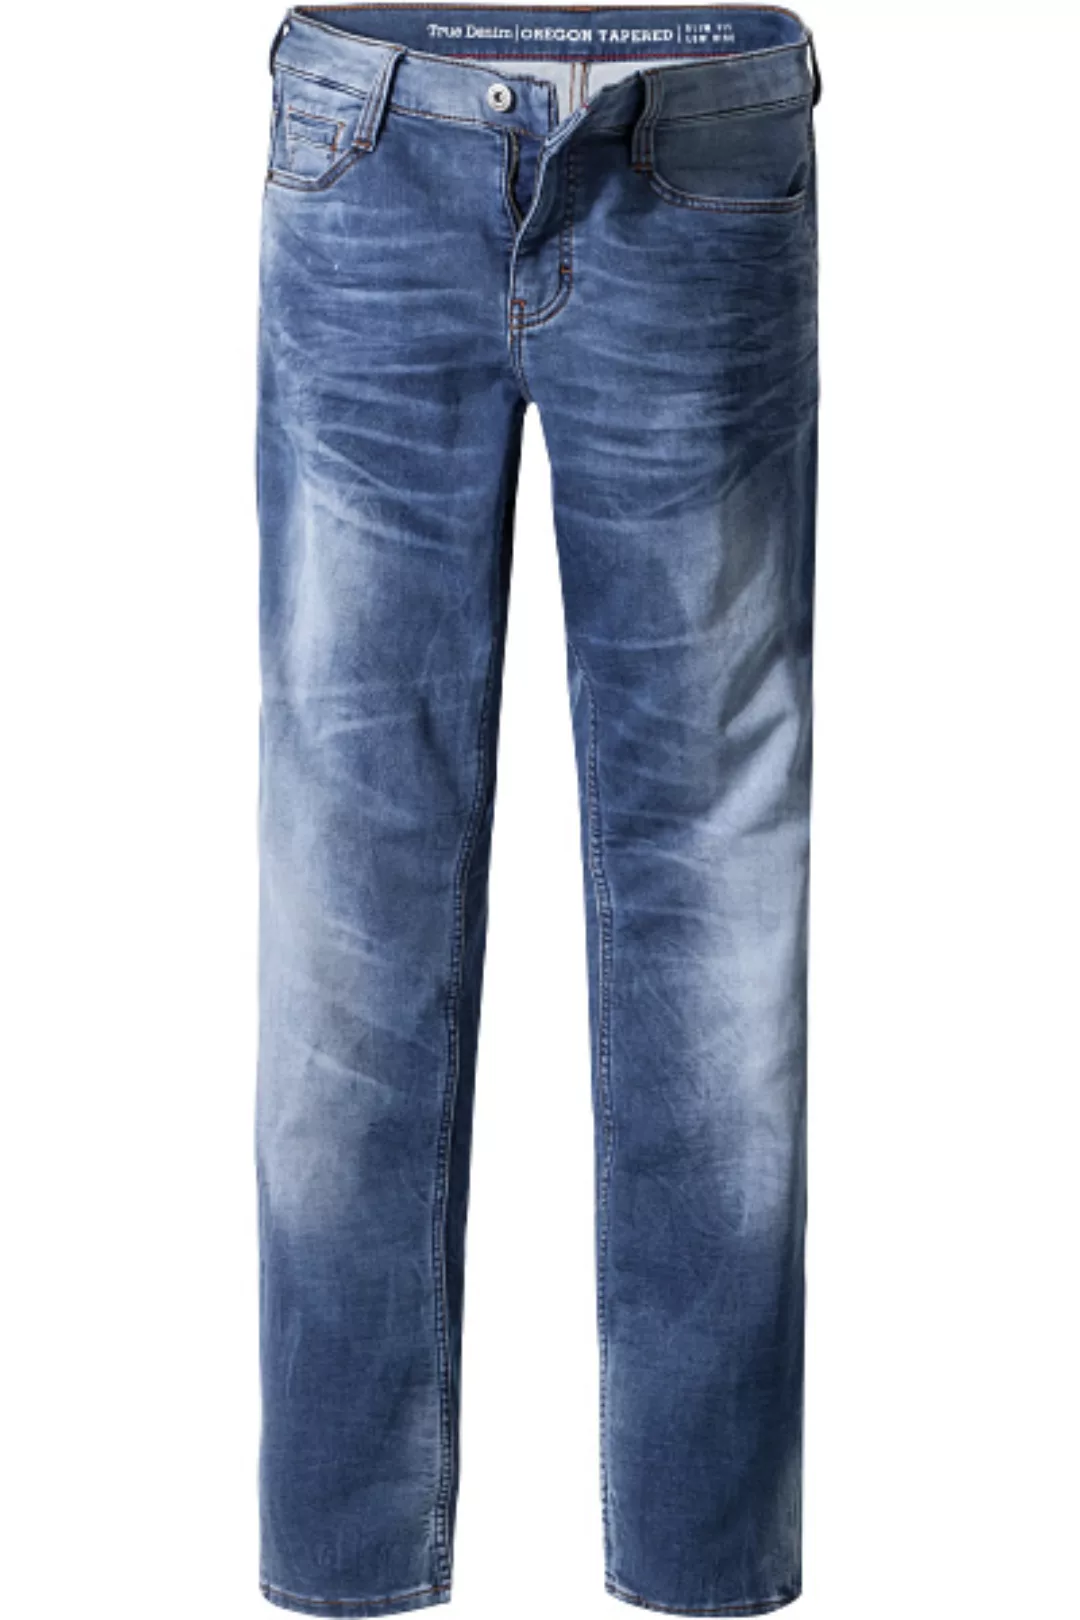 MUSTANG Jeans Oregon Tapered 3112/5455/536 günstig online kaufen